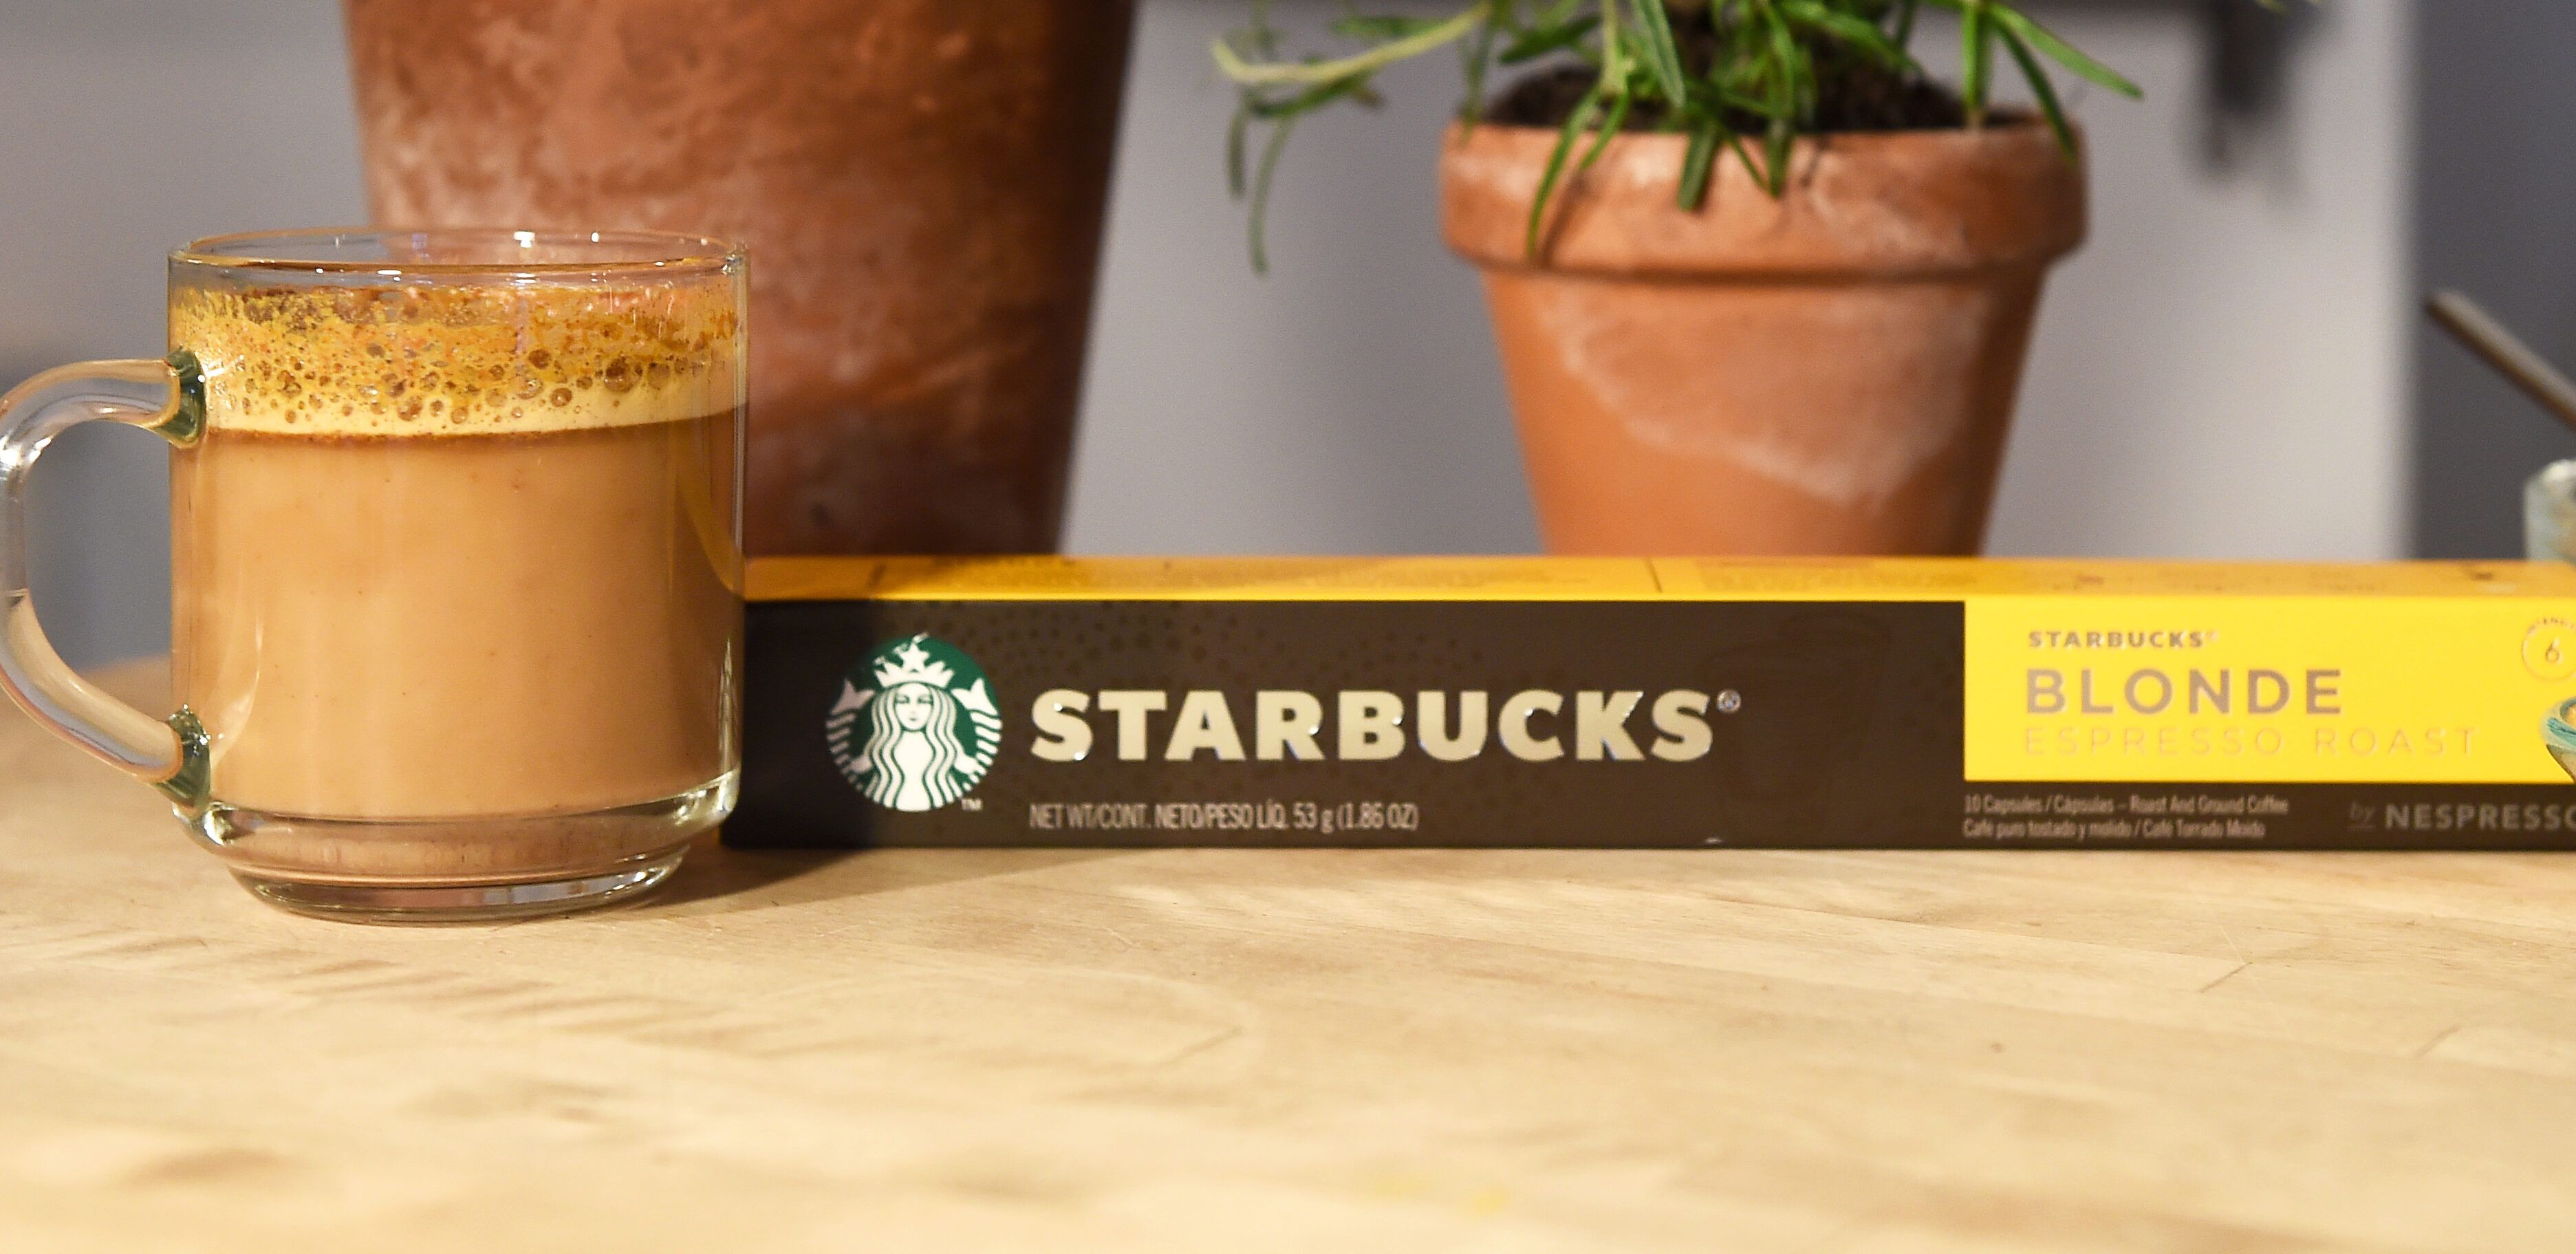 toonhoogte Wonderbaarlijk kristal Starbucks Is Rolling Out Its First At-Home Nespresso Capsules This Summer